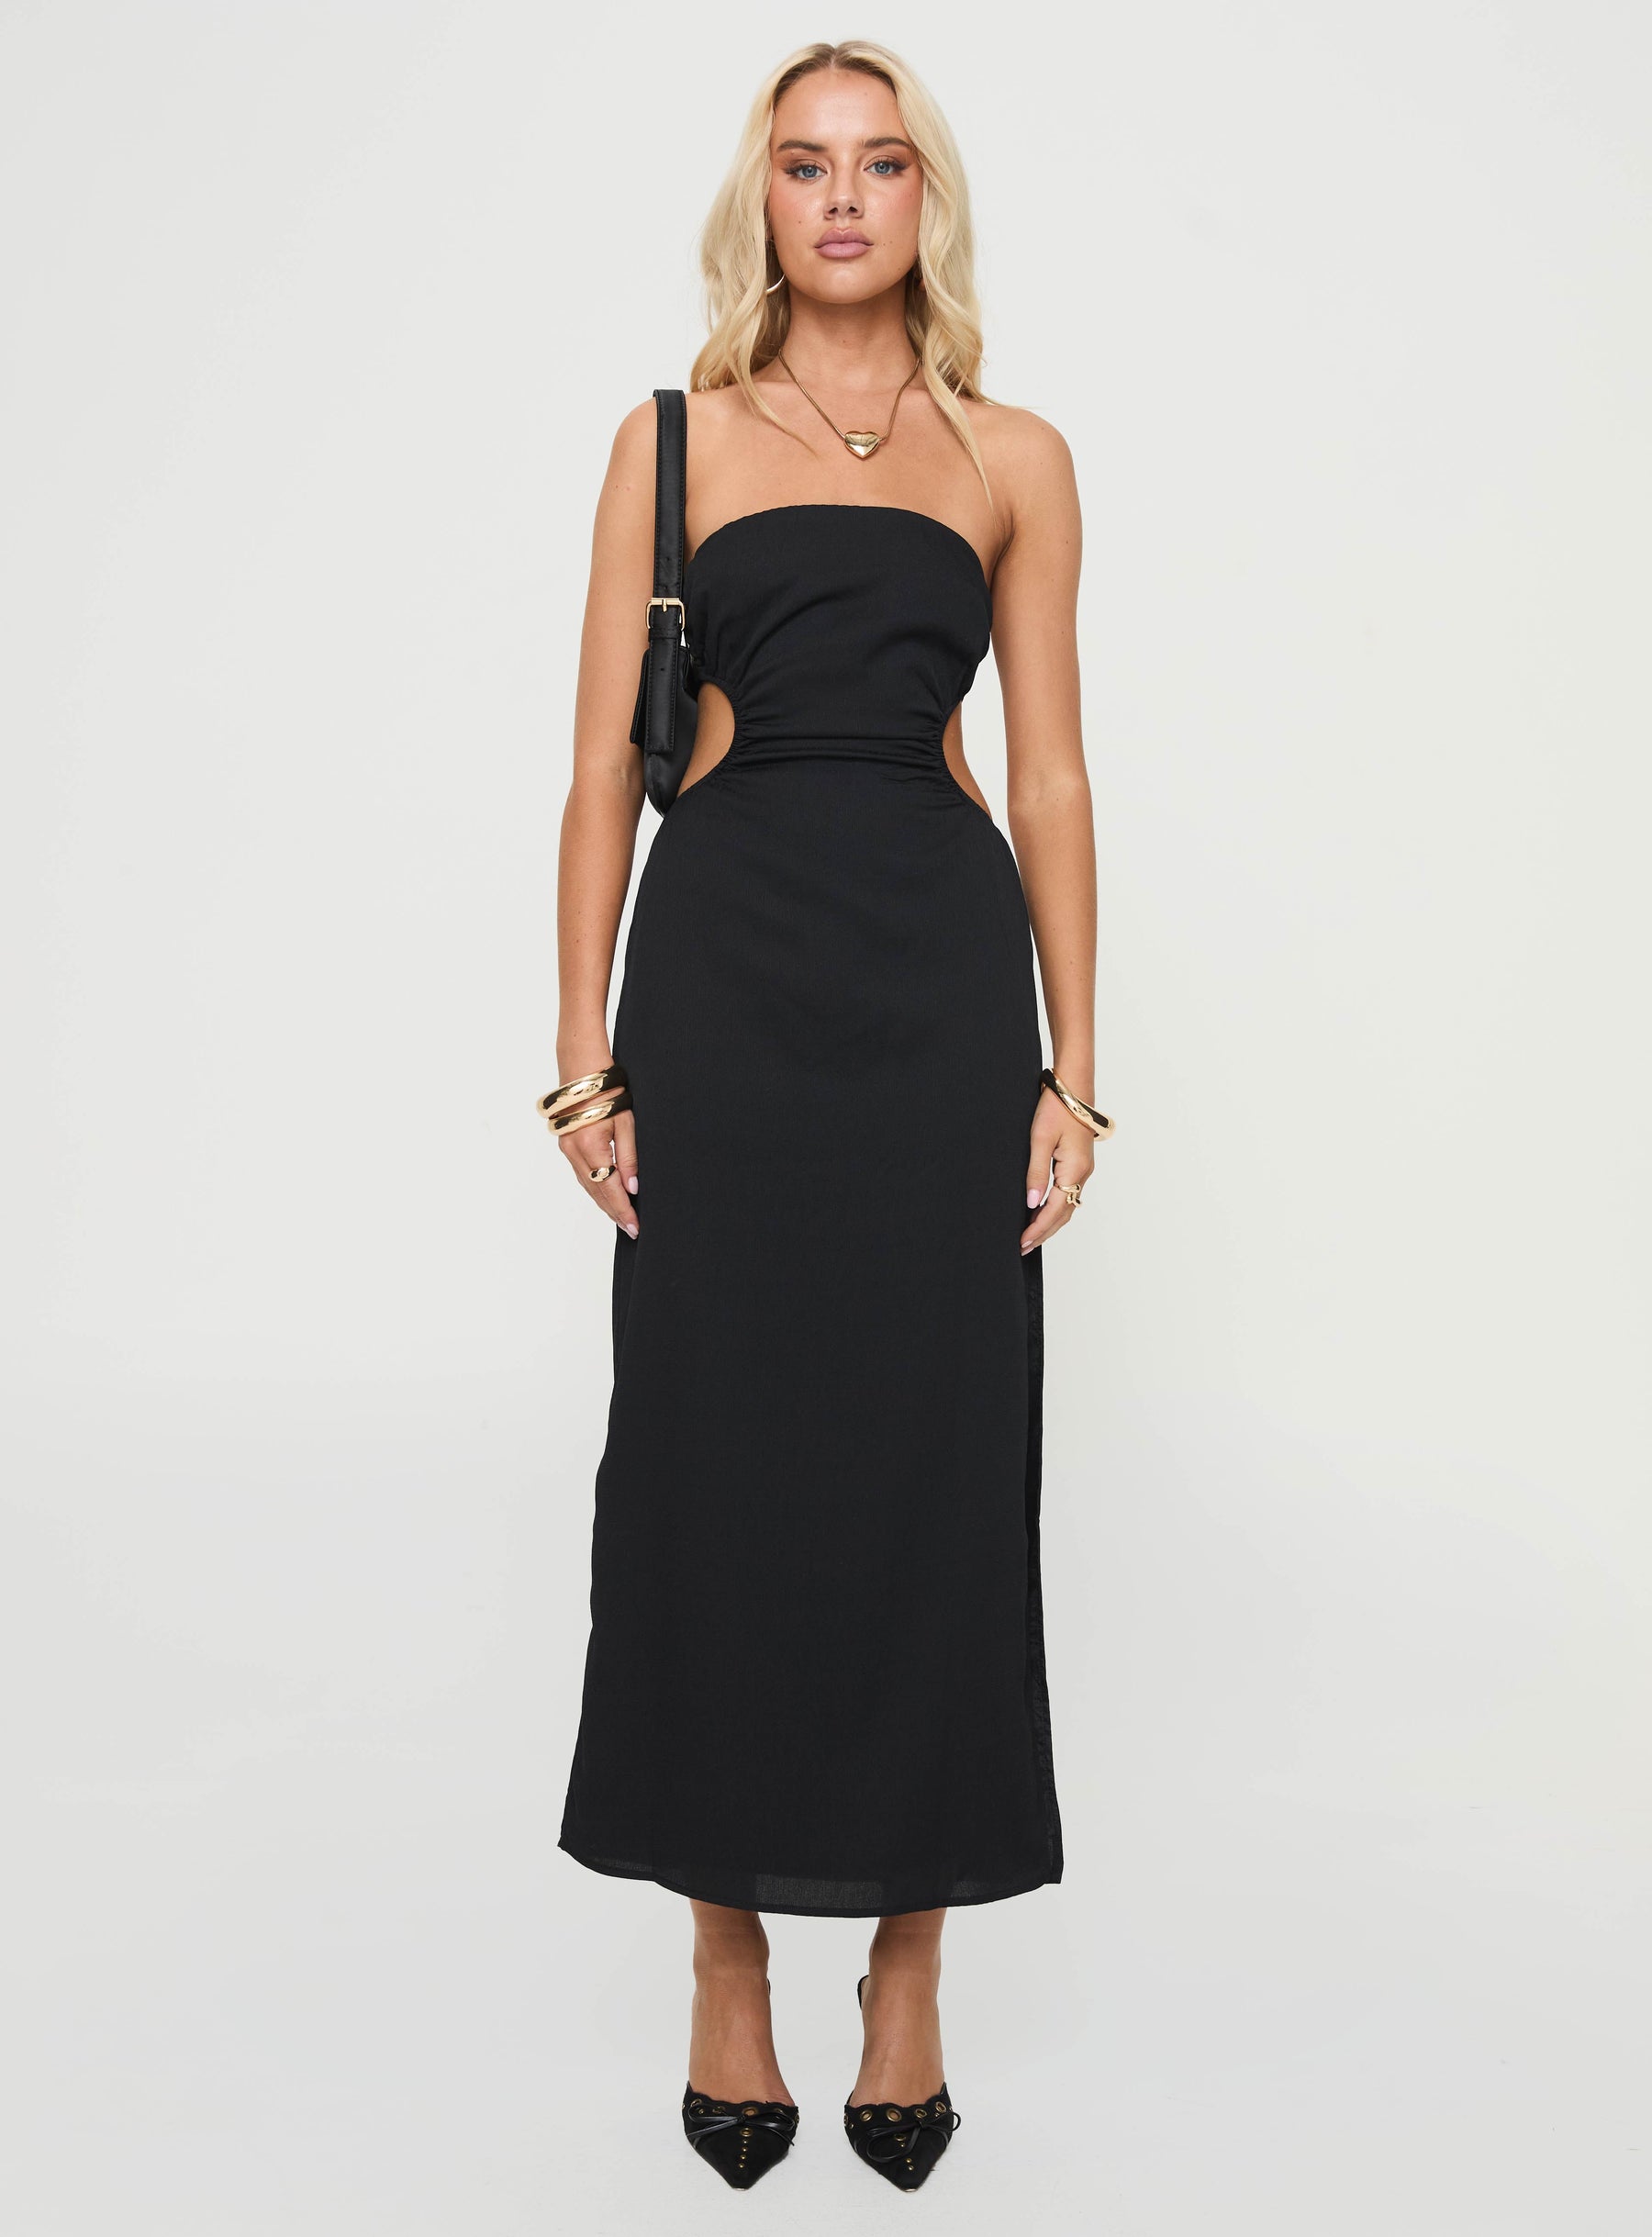 Shop Formal Dress - Tailor Strapless Maxi Dress Black third image